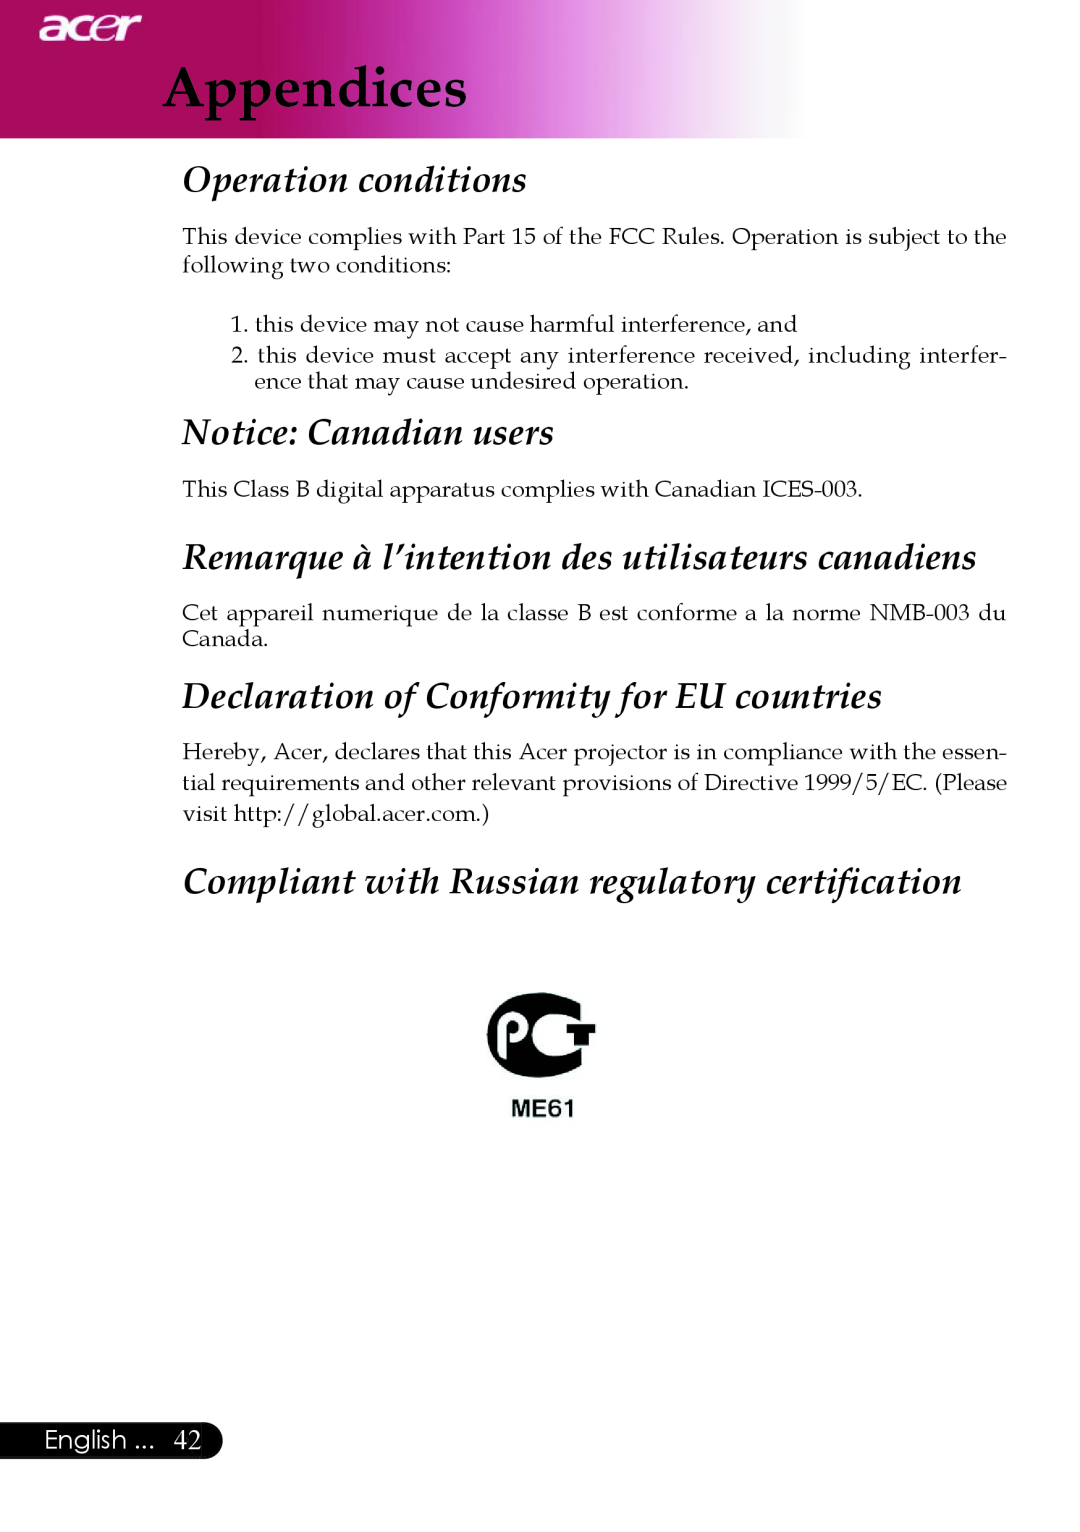 Acer XD1150 Operation conditions, Notice Canadian users, Remarque à l’intention des utilisateurs canadiens, Appendices 